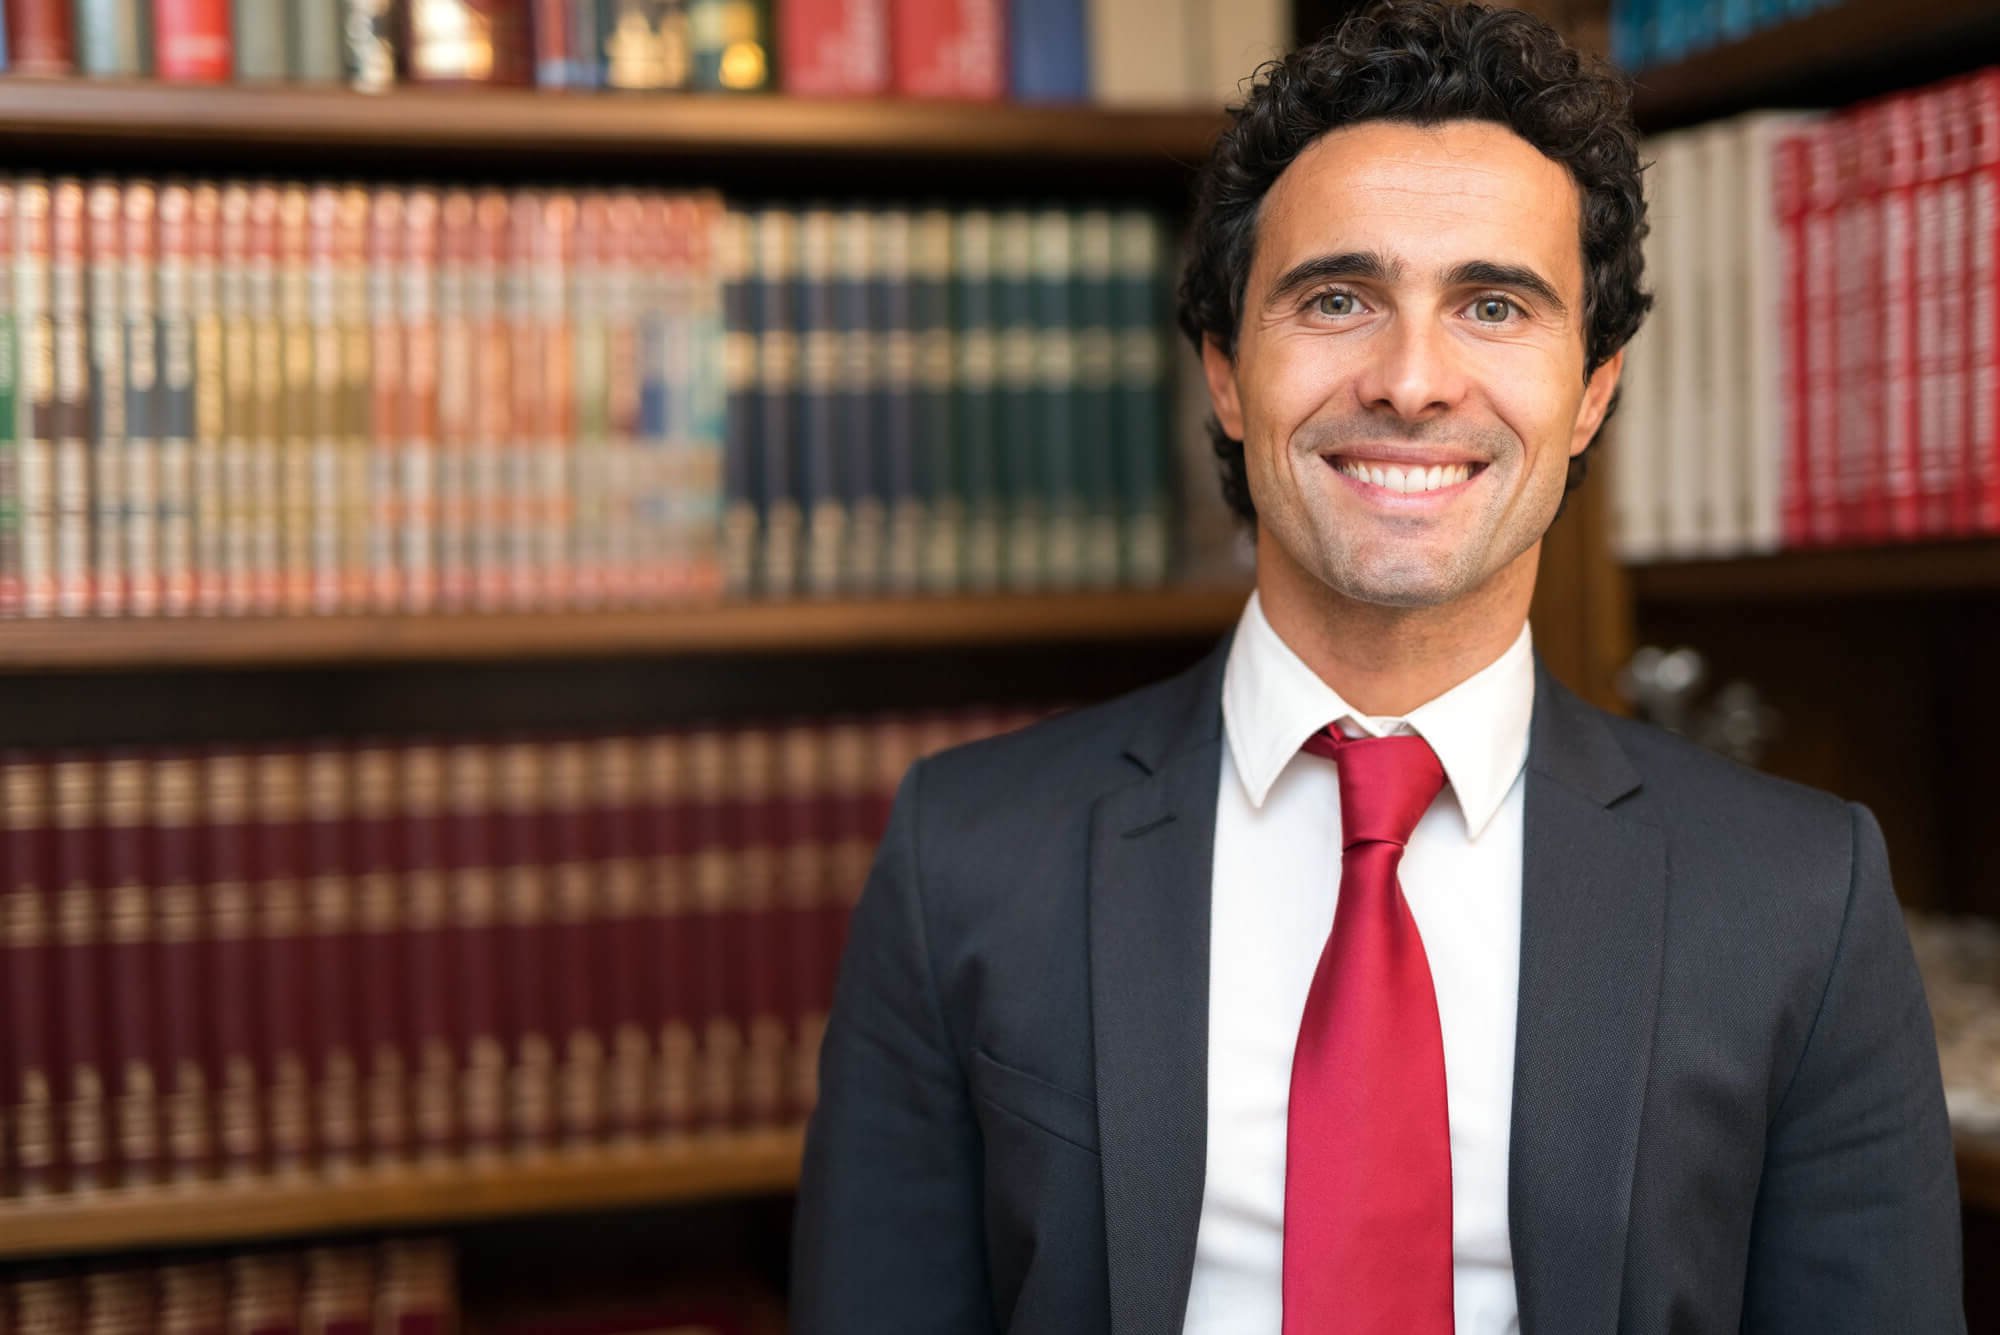 Smiling lawyer portrait